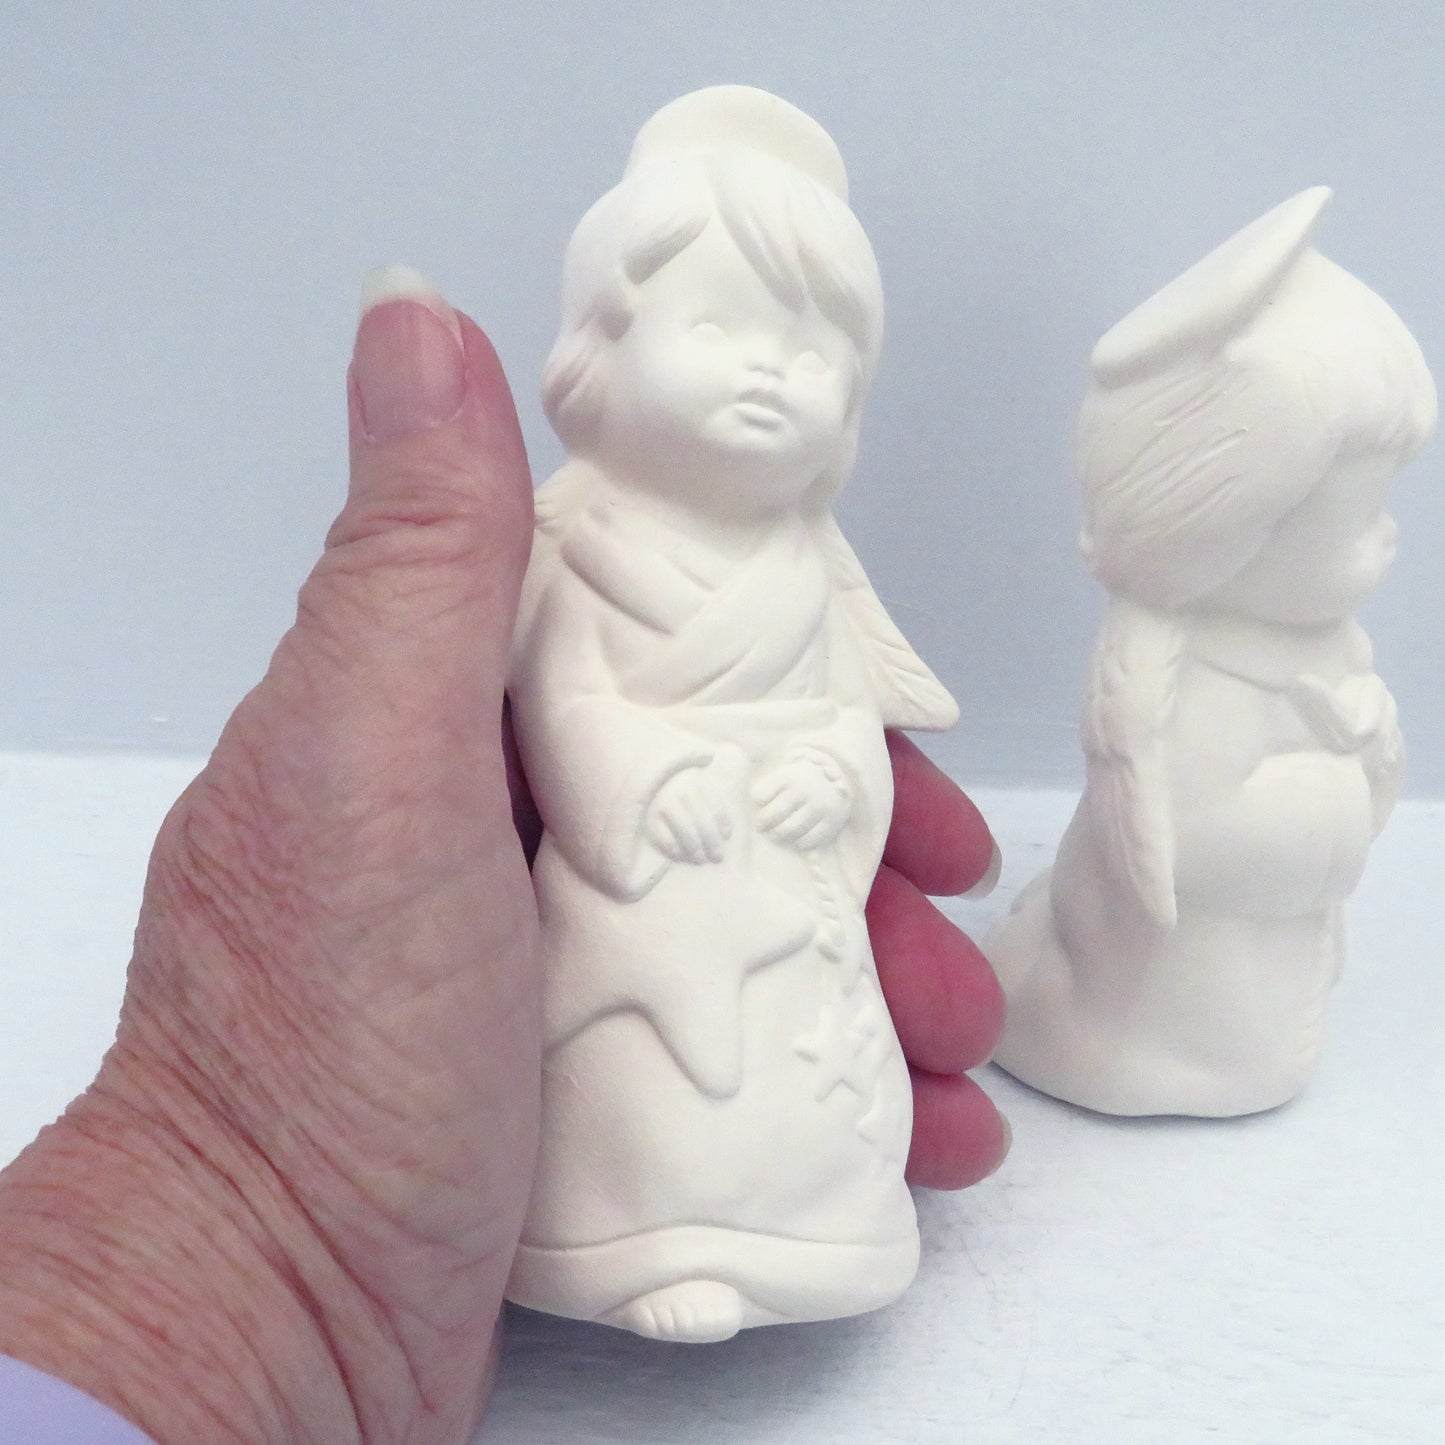 Handmade Ready to Paint Set of 3 Angel Figurines